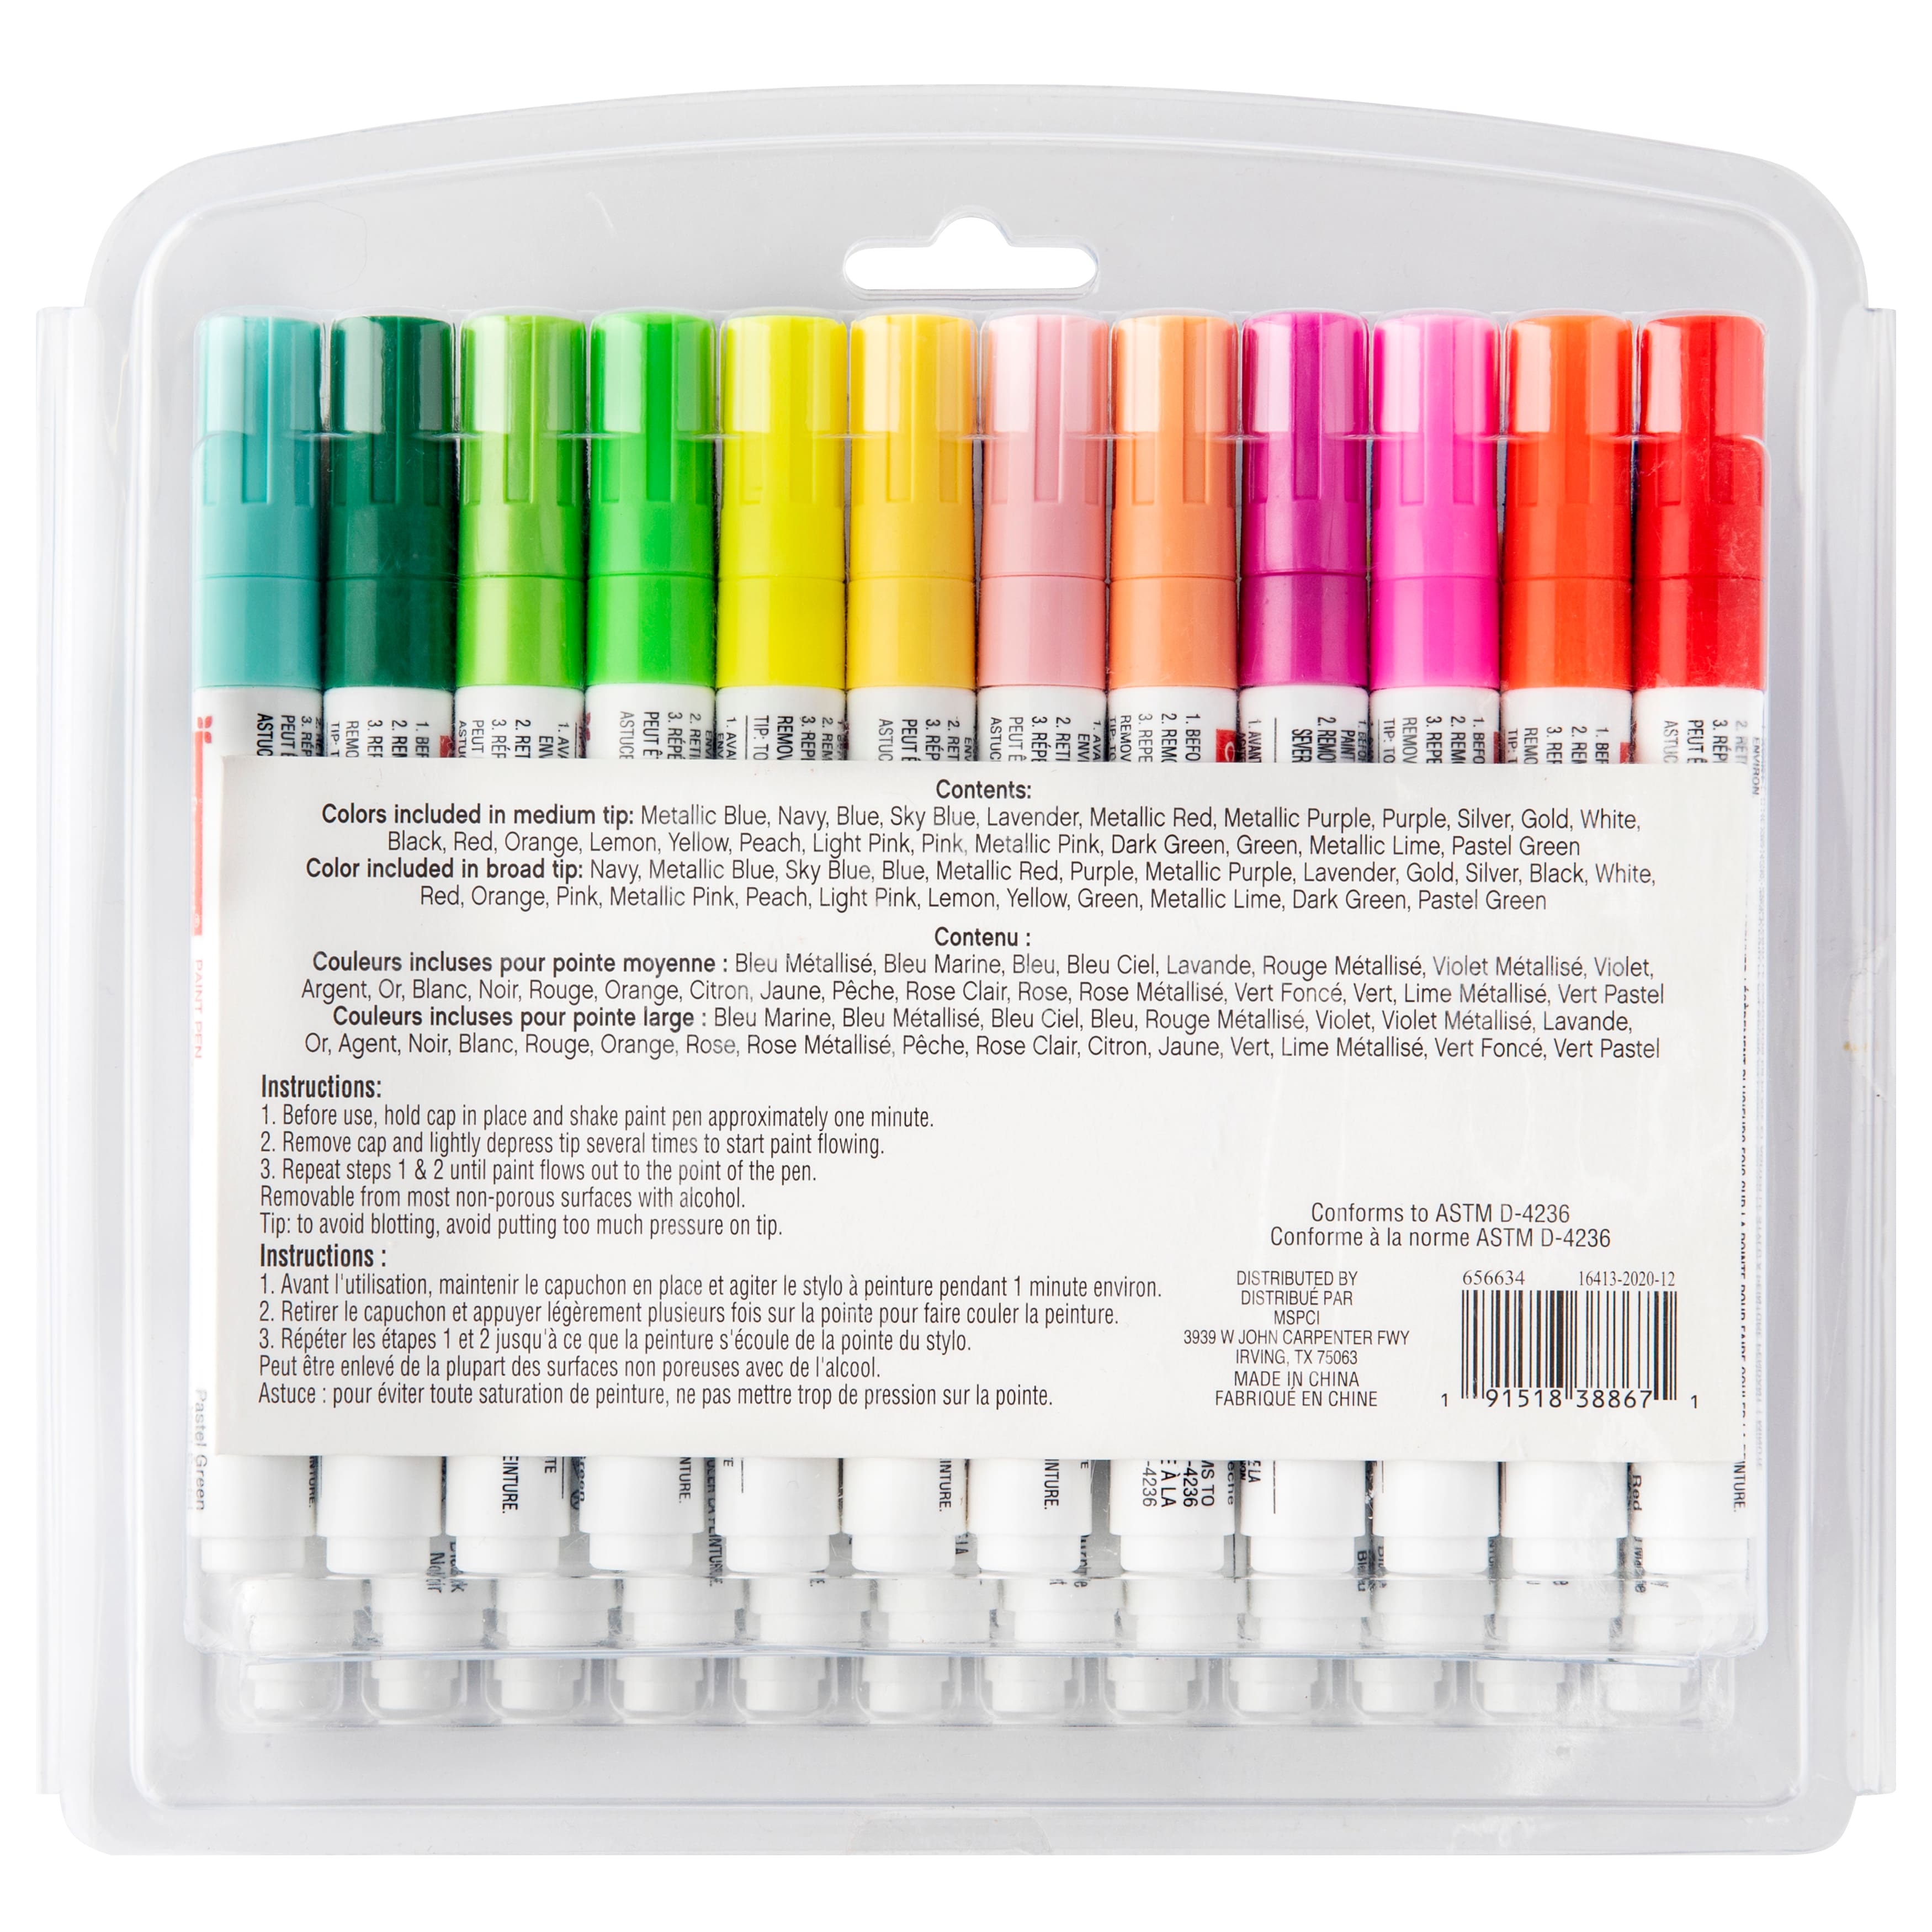 Basic & Metallic Paint Pen Set by Craft Smart®, Michaels